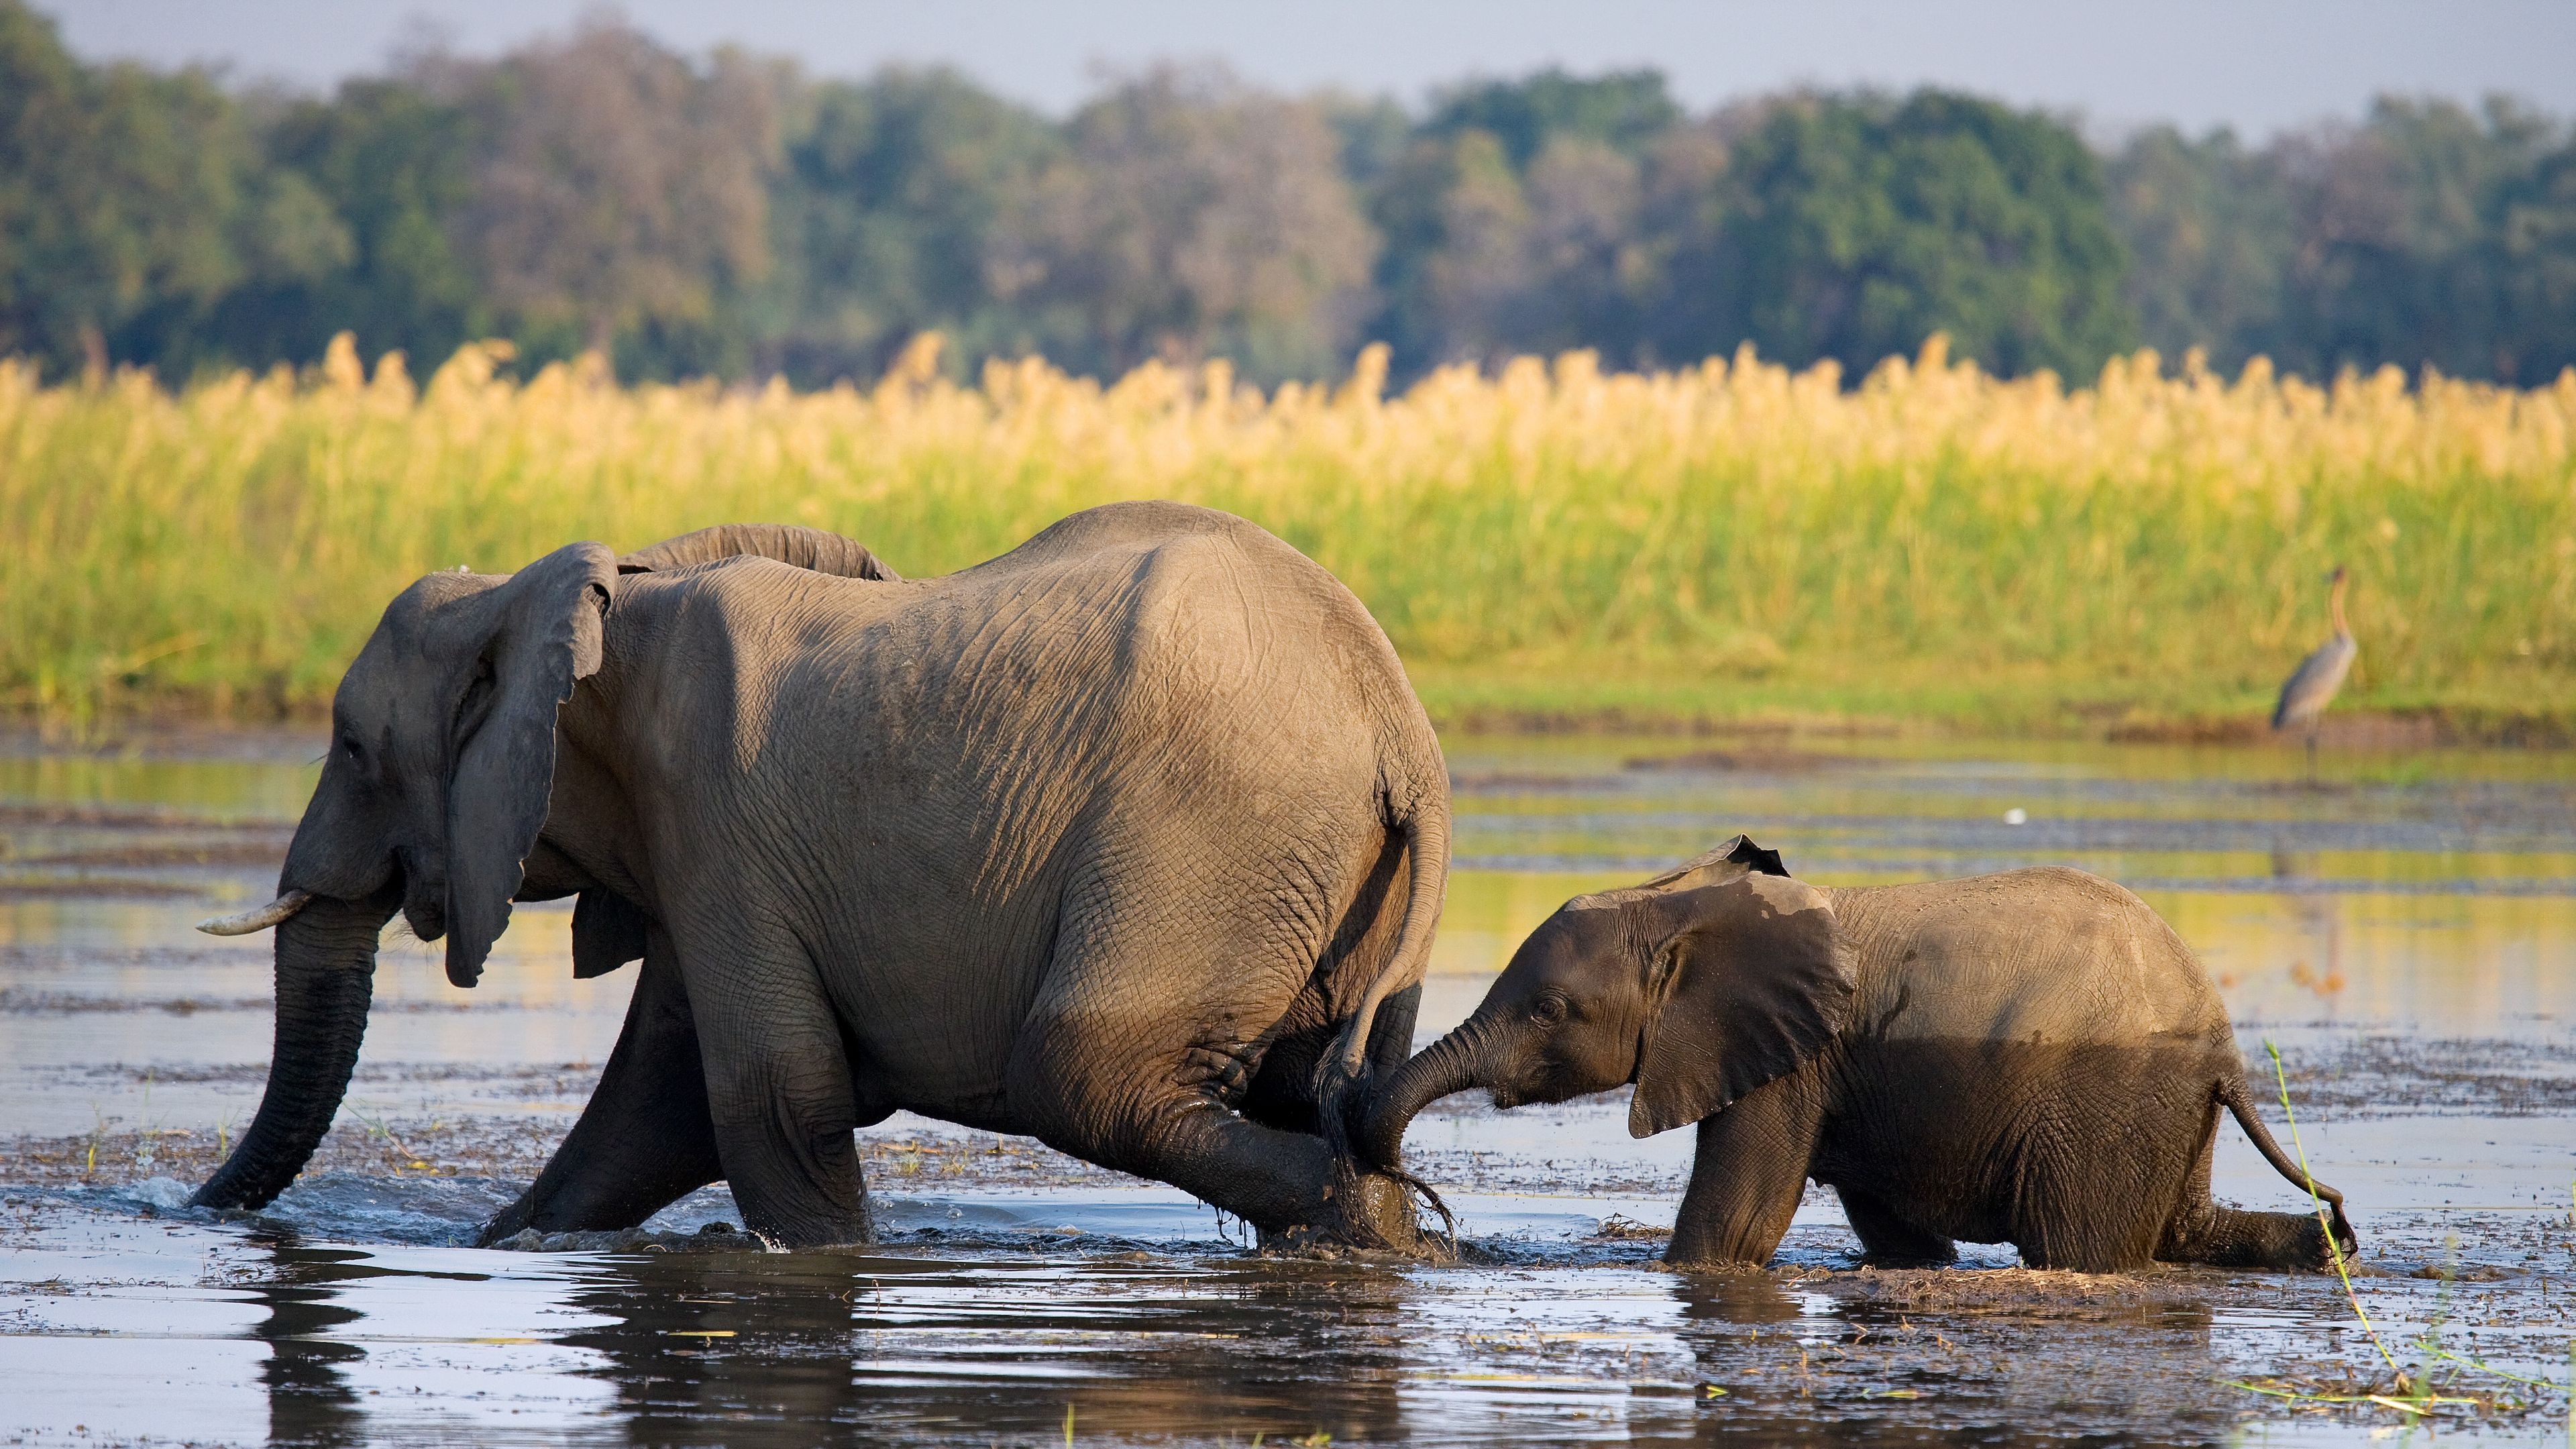 natucate-safari-zambia-mobile-luangwa-adventure-bush-camp-elephant-river-walking